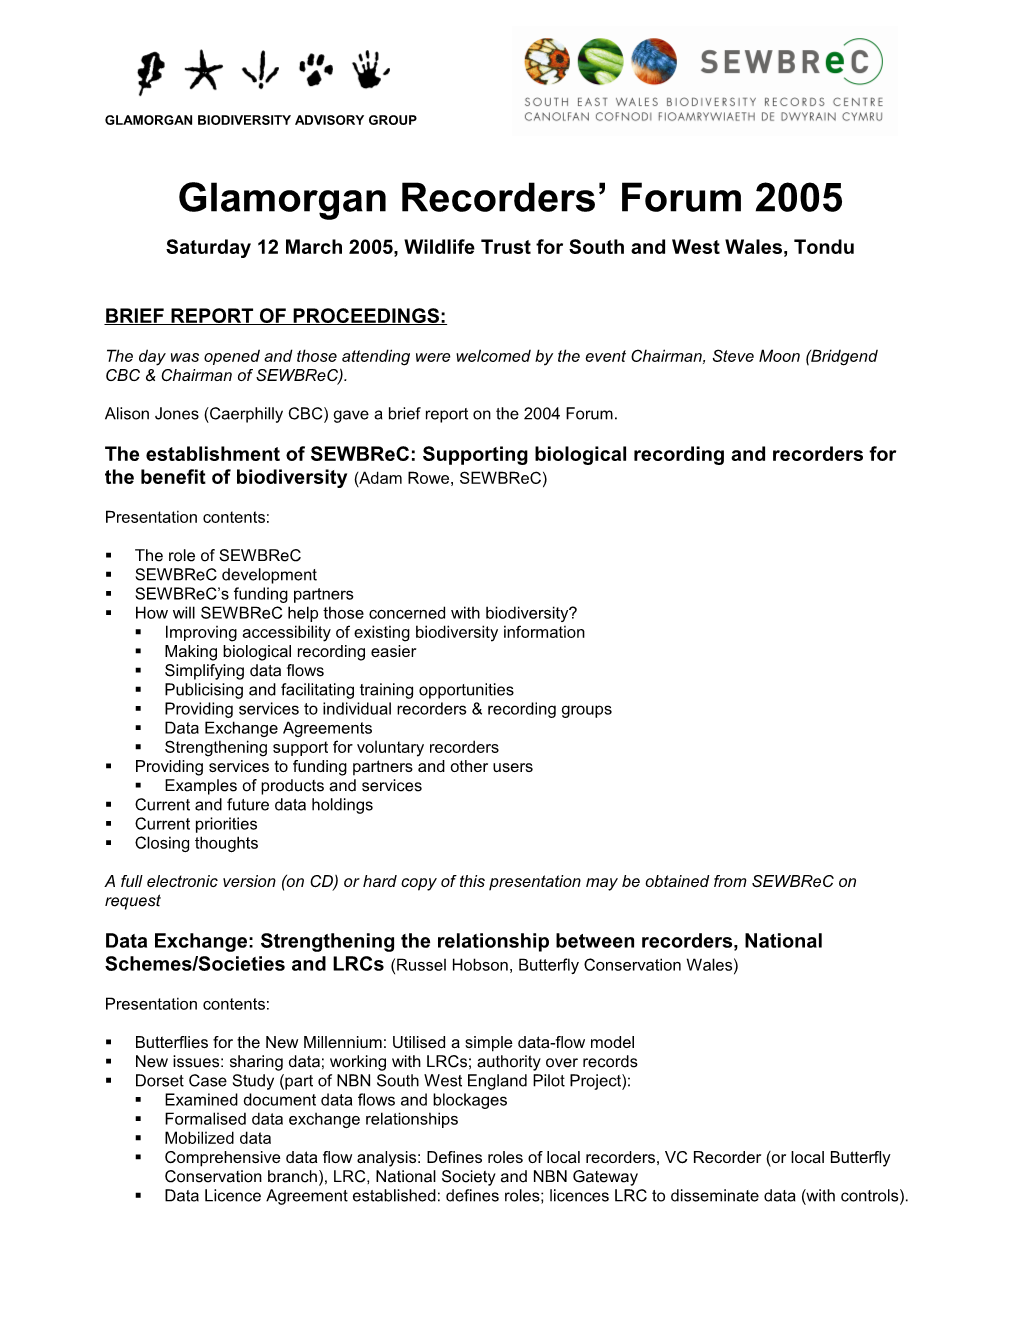 Glamorgan Biodiversity Advisory Group